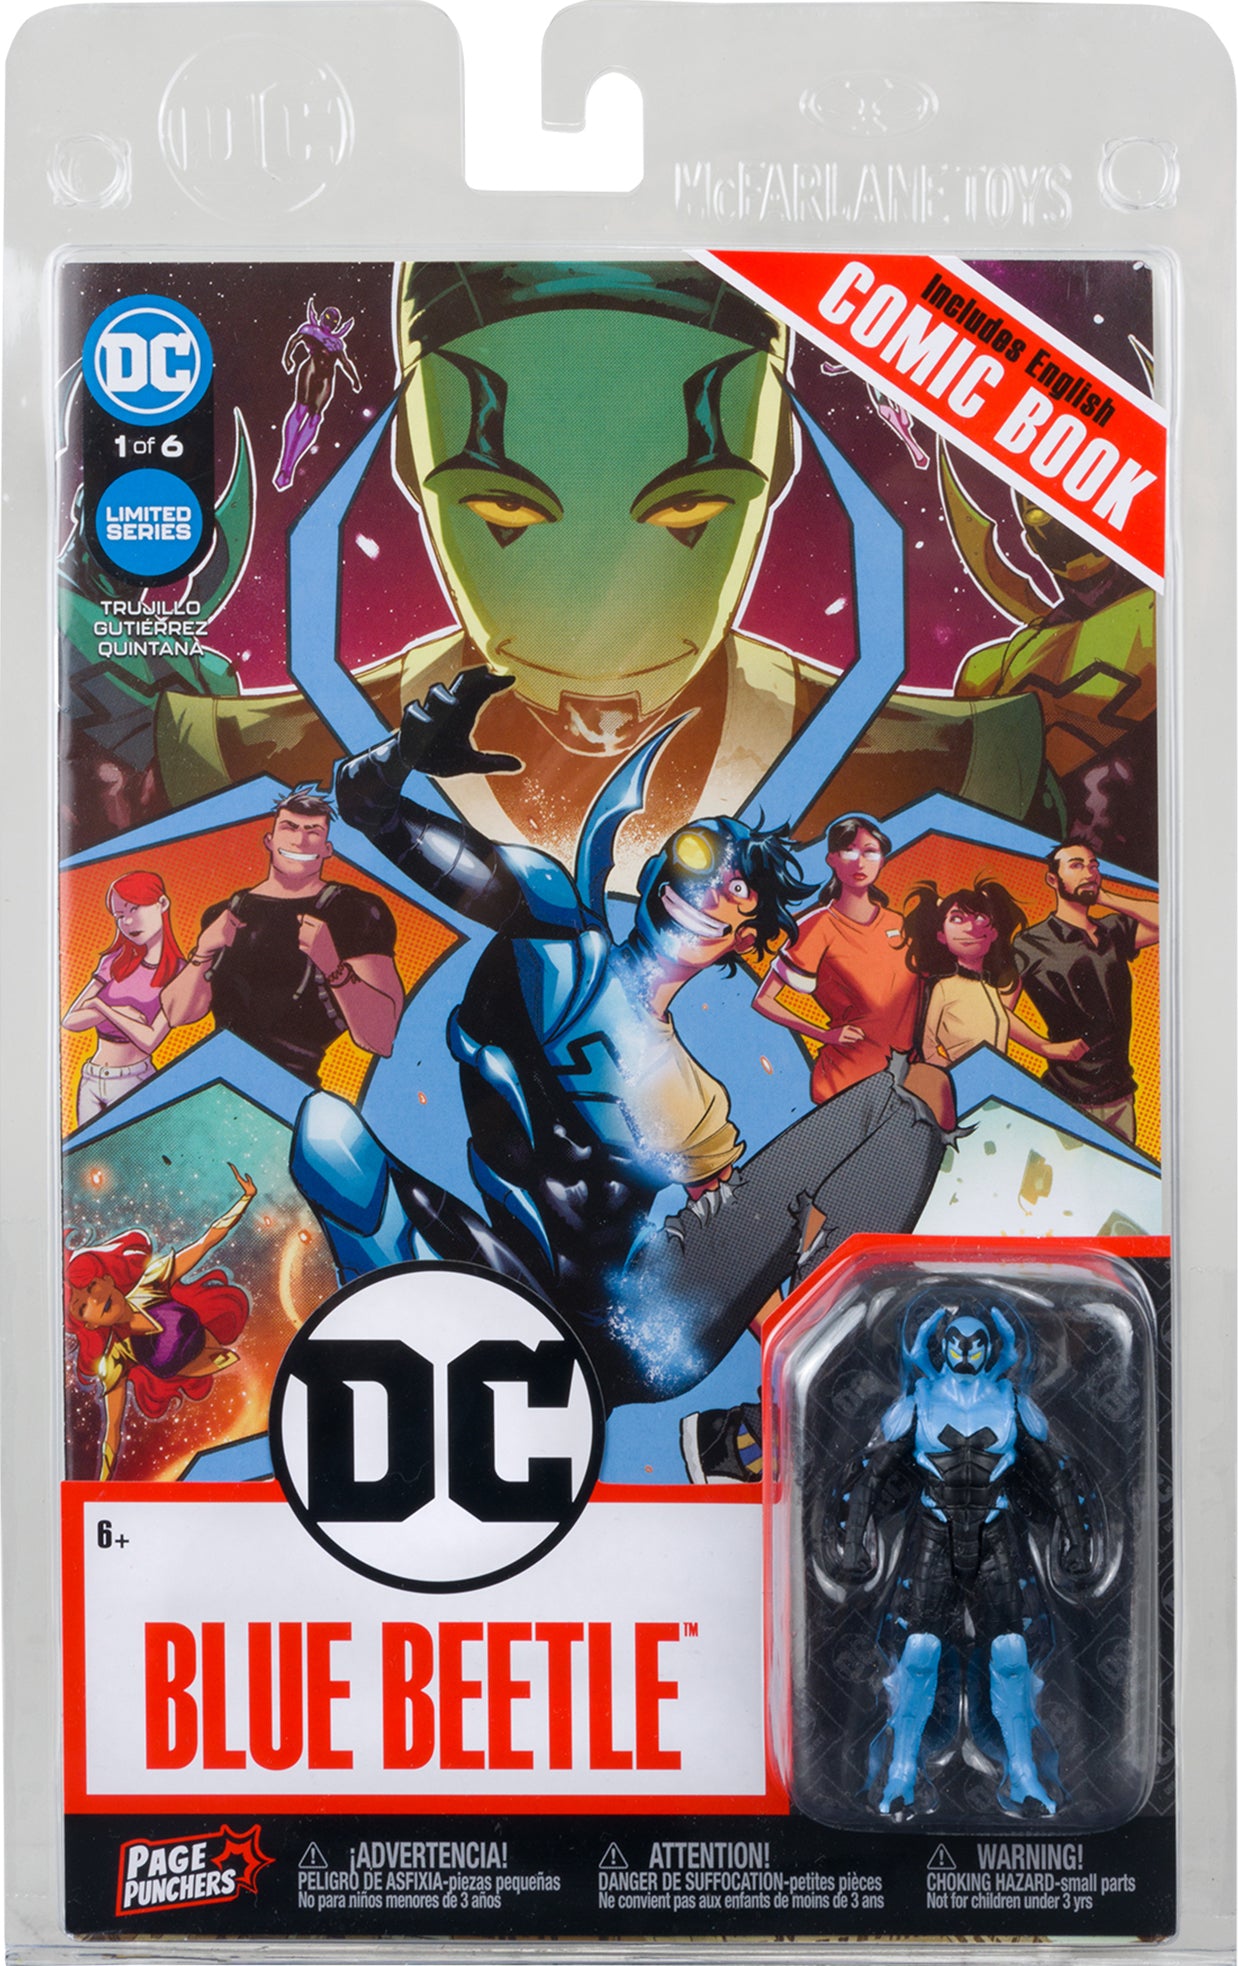 McFarlane Toys DC Comics Page Punchers Comic Book with Blue Beetle Mini Figure